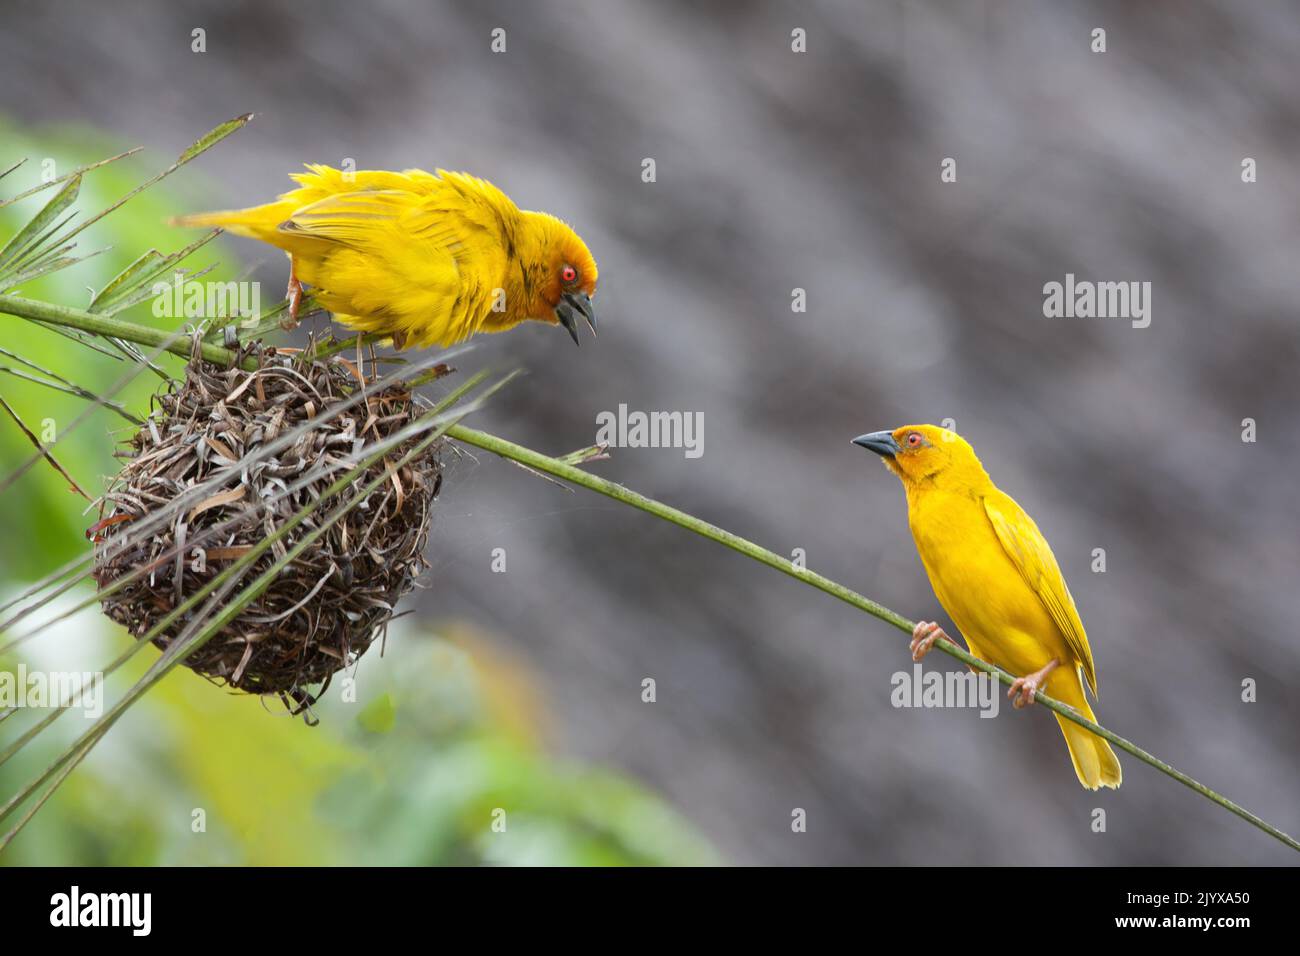 Two golden palm weaving birds defending their nest Stock Photo